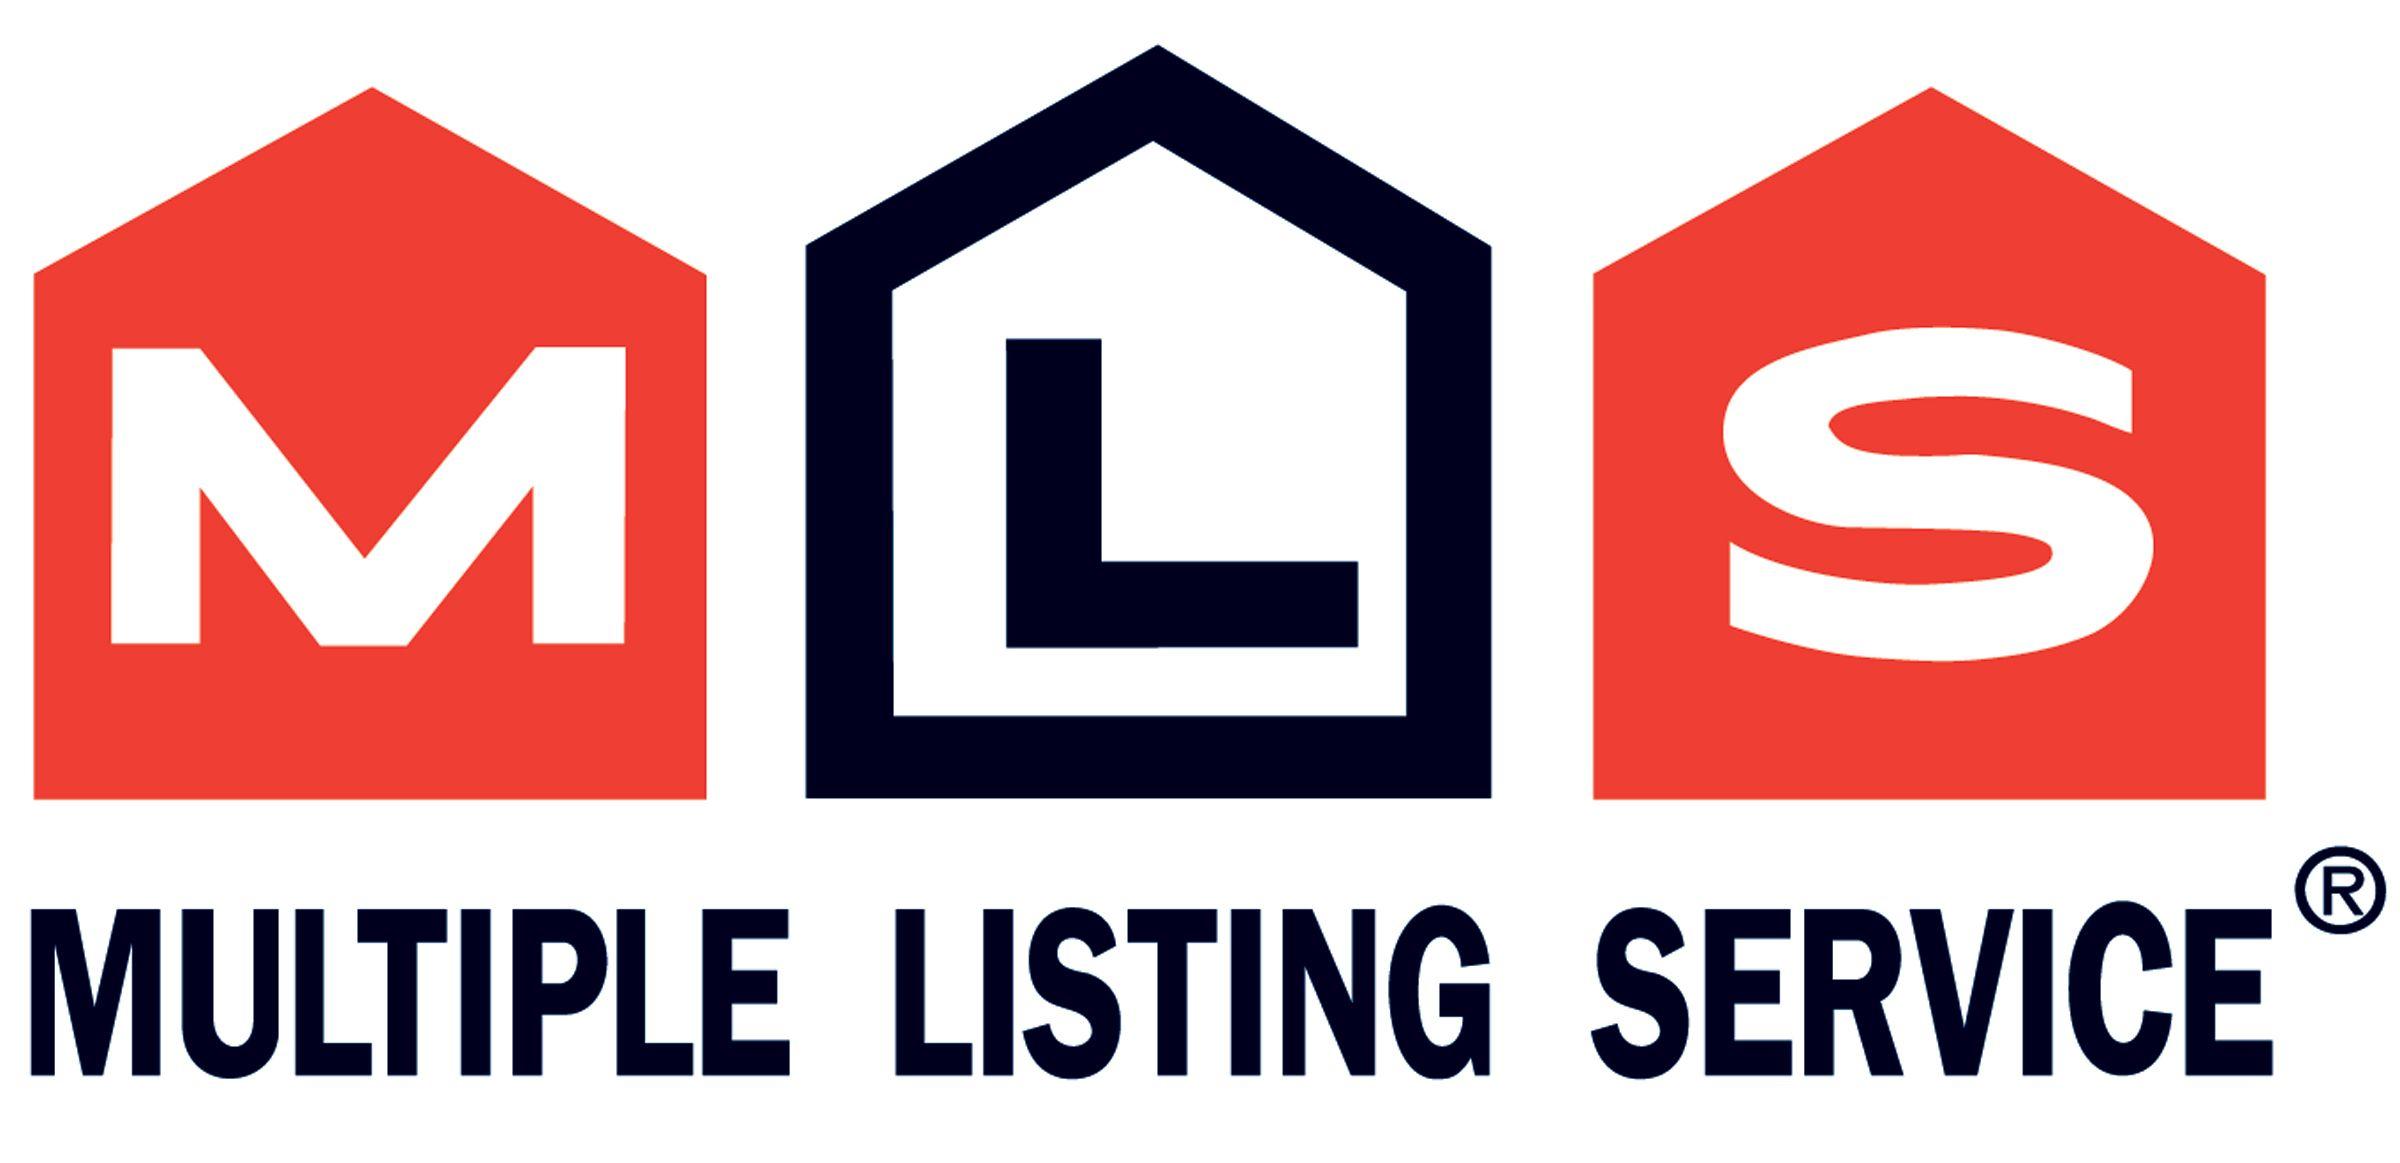 Real Estate MLS Logo - REALTOR® Brand